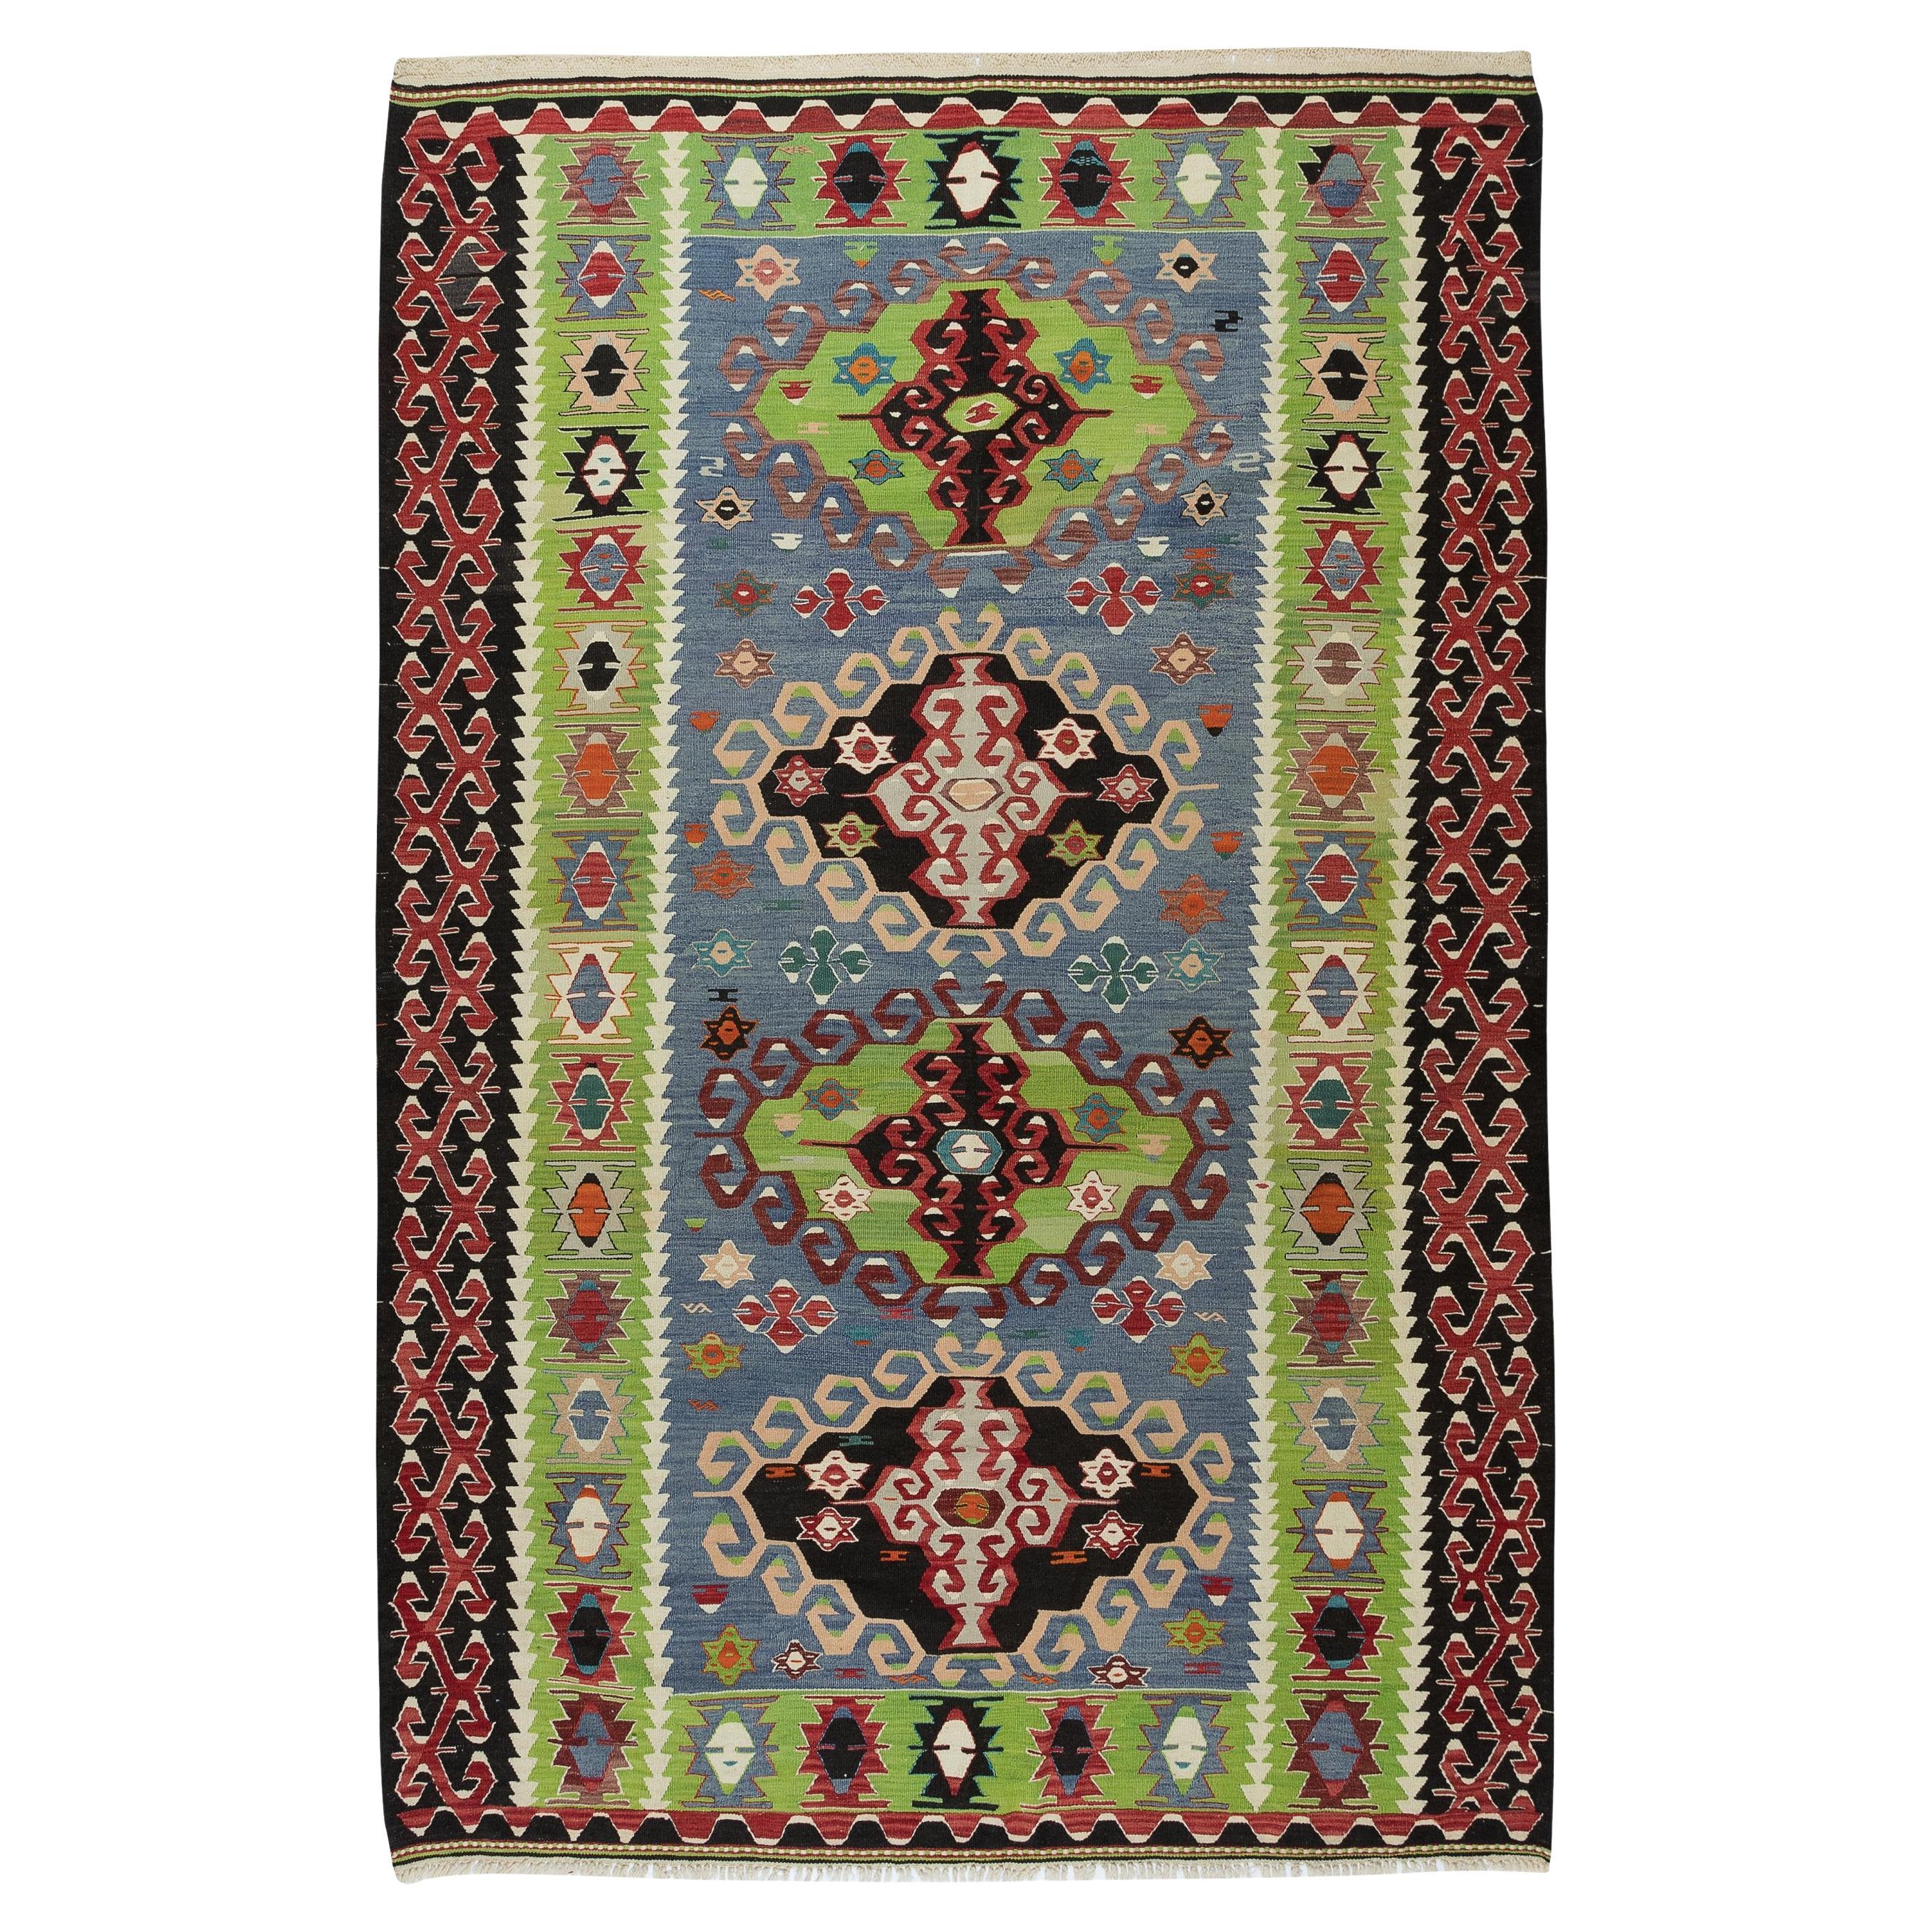 6x8.8 Ft Colorful Vintage Handmade Turkish Kilim Rug, Flat-Weave Floor Covering (Tappeto a trama piatta)